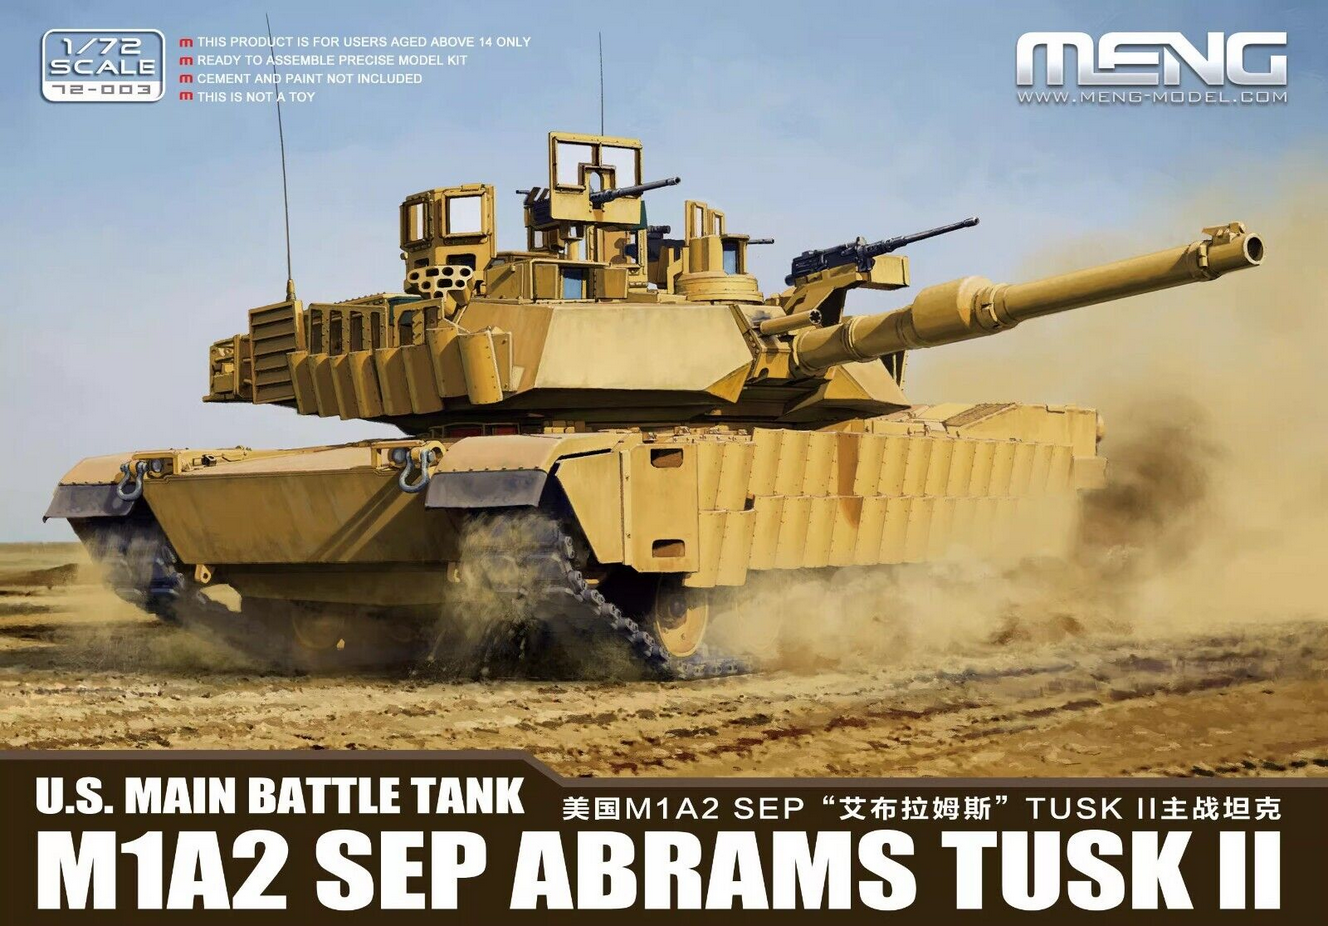 U.S. Main Battle Tank M1A2 SEP ABRAMS TUSK II - MENG 1/72